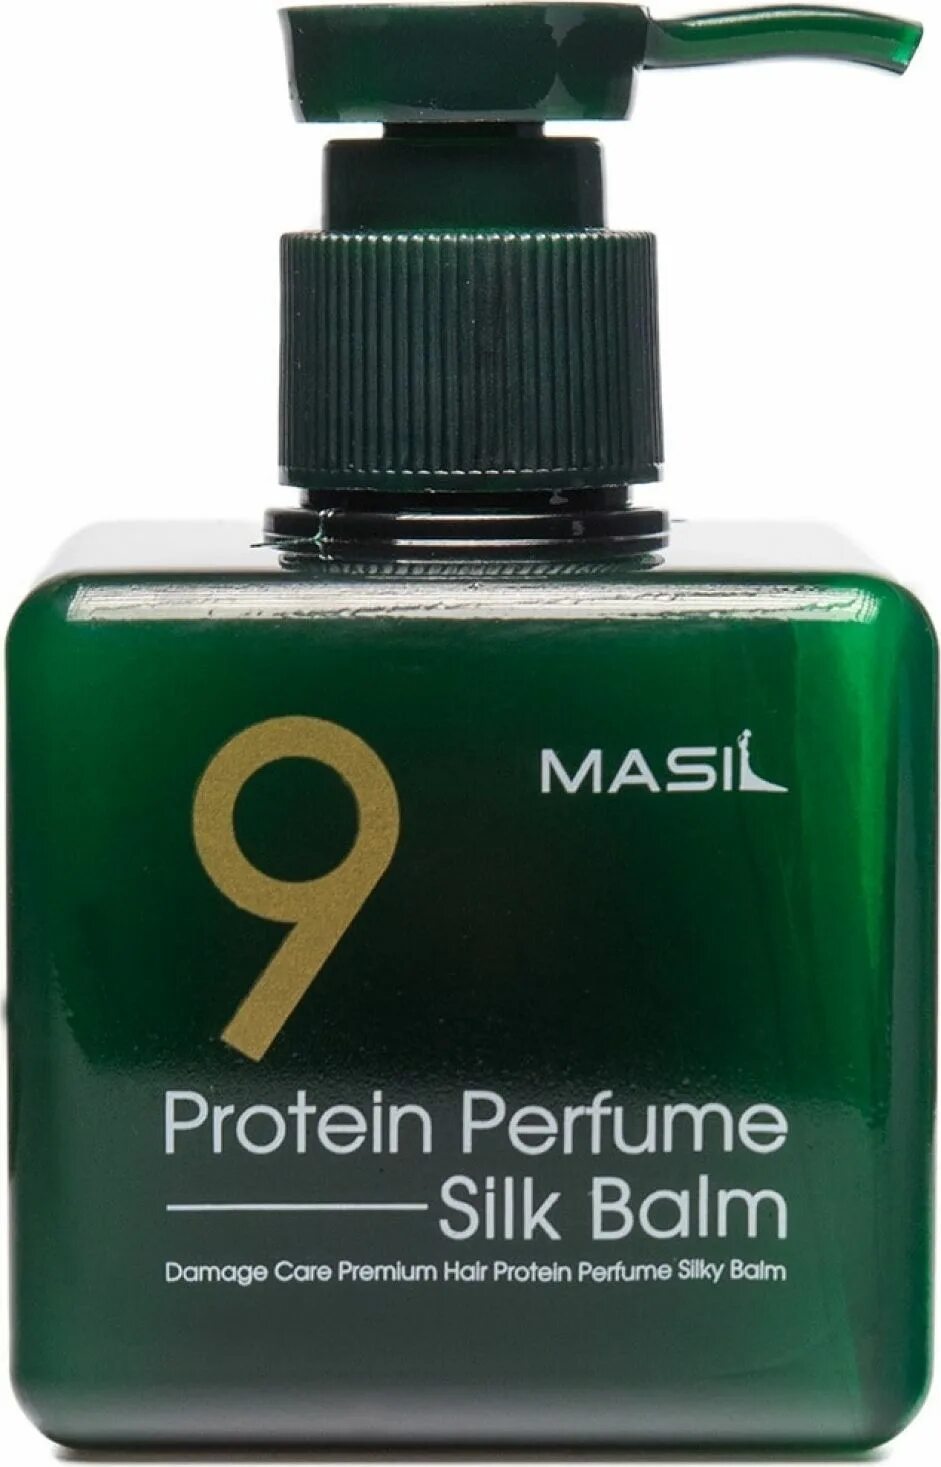 Бальзам протеин. 9 Protein Perfume Silk Balm. Masil бальзам 9 Protein Perfume Silk Balm. Masil бальзам для волос несмываемый. Masil 9 Protein Perfume Silk Balm 180 мл.